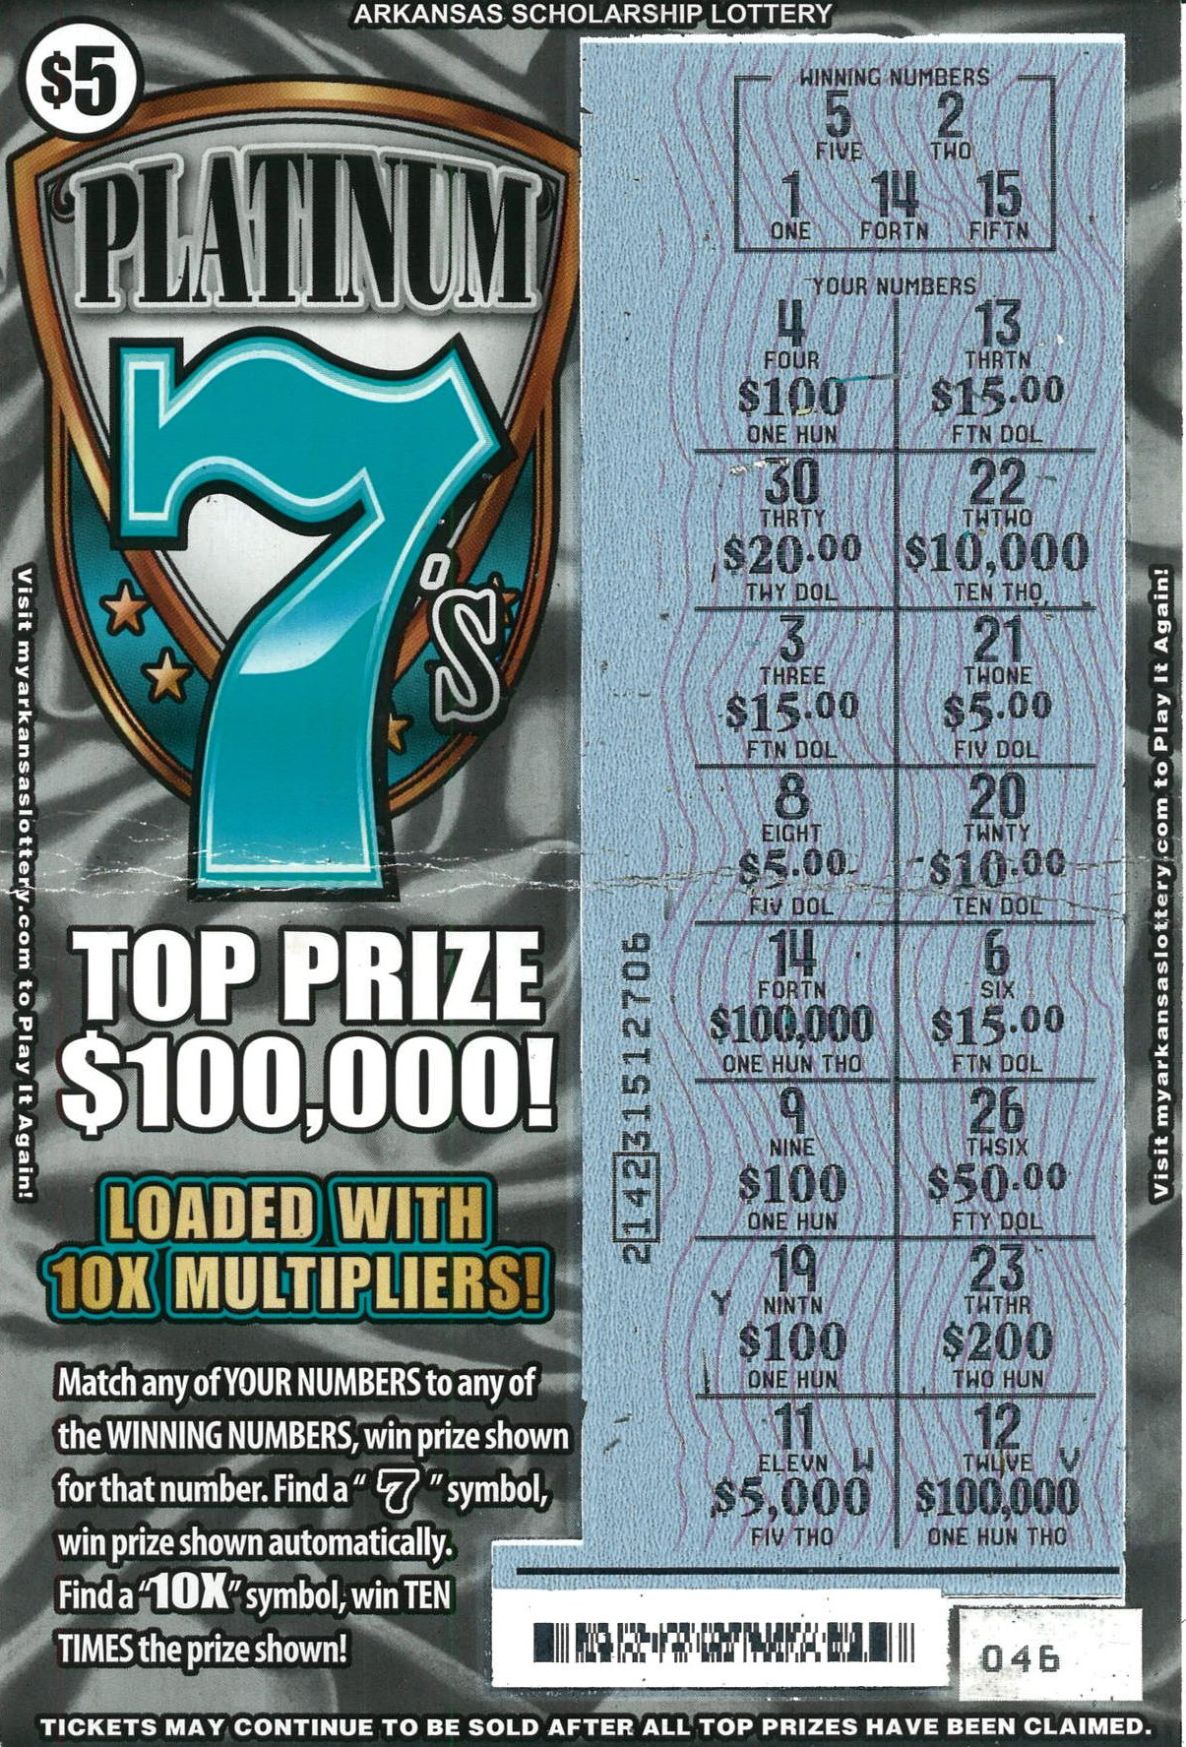 Smackover woman wins $100,000 Arkansas lottery scratch-off prize | News | 0